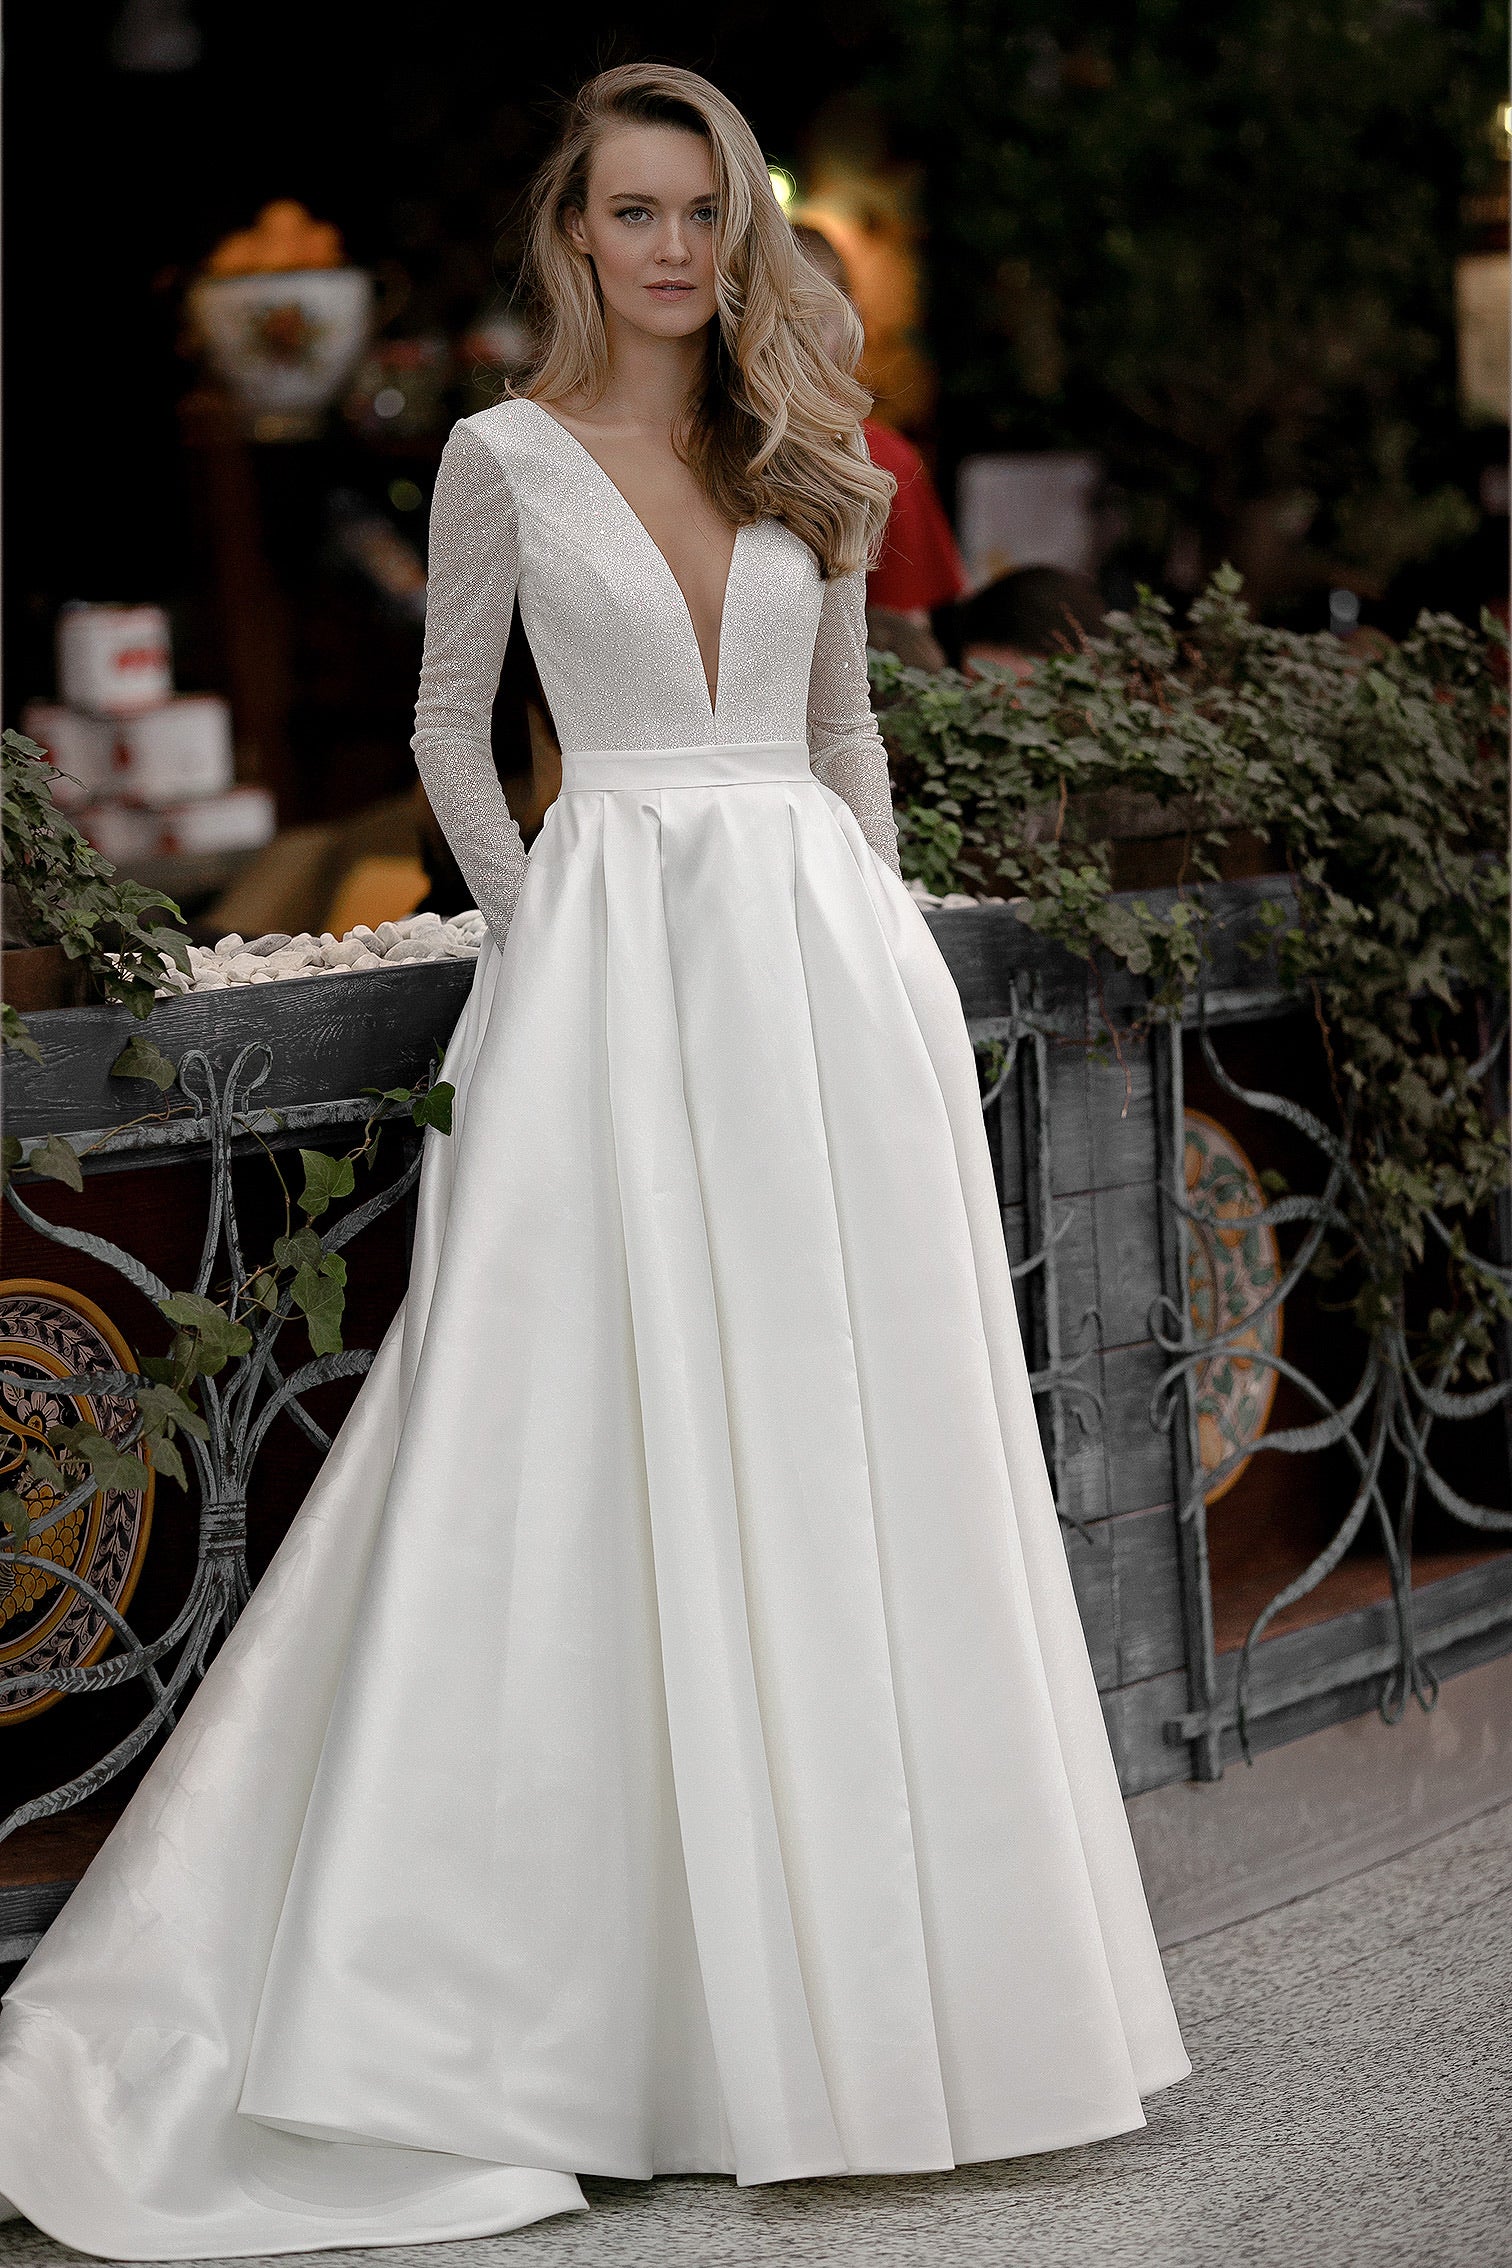 Winter Wedding Dresses to Look Spectacular - Tina Valerdi